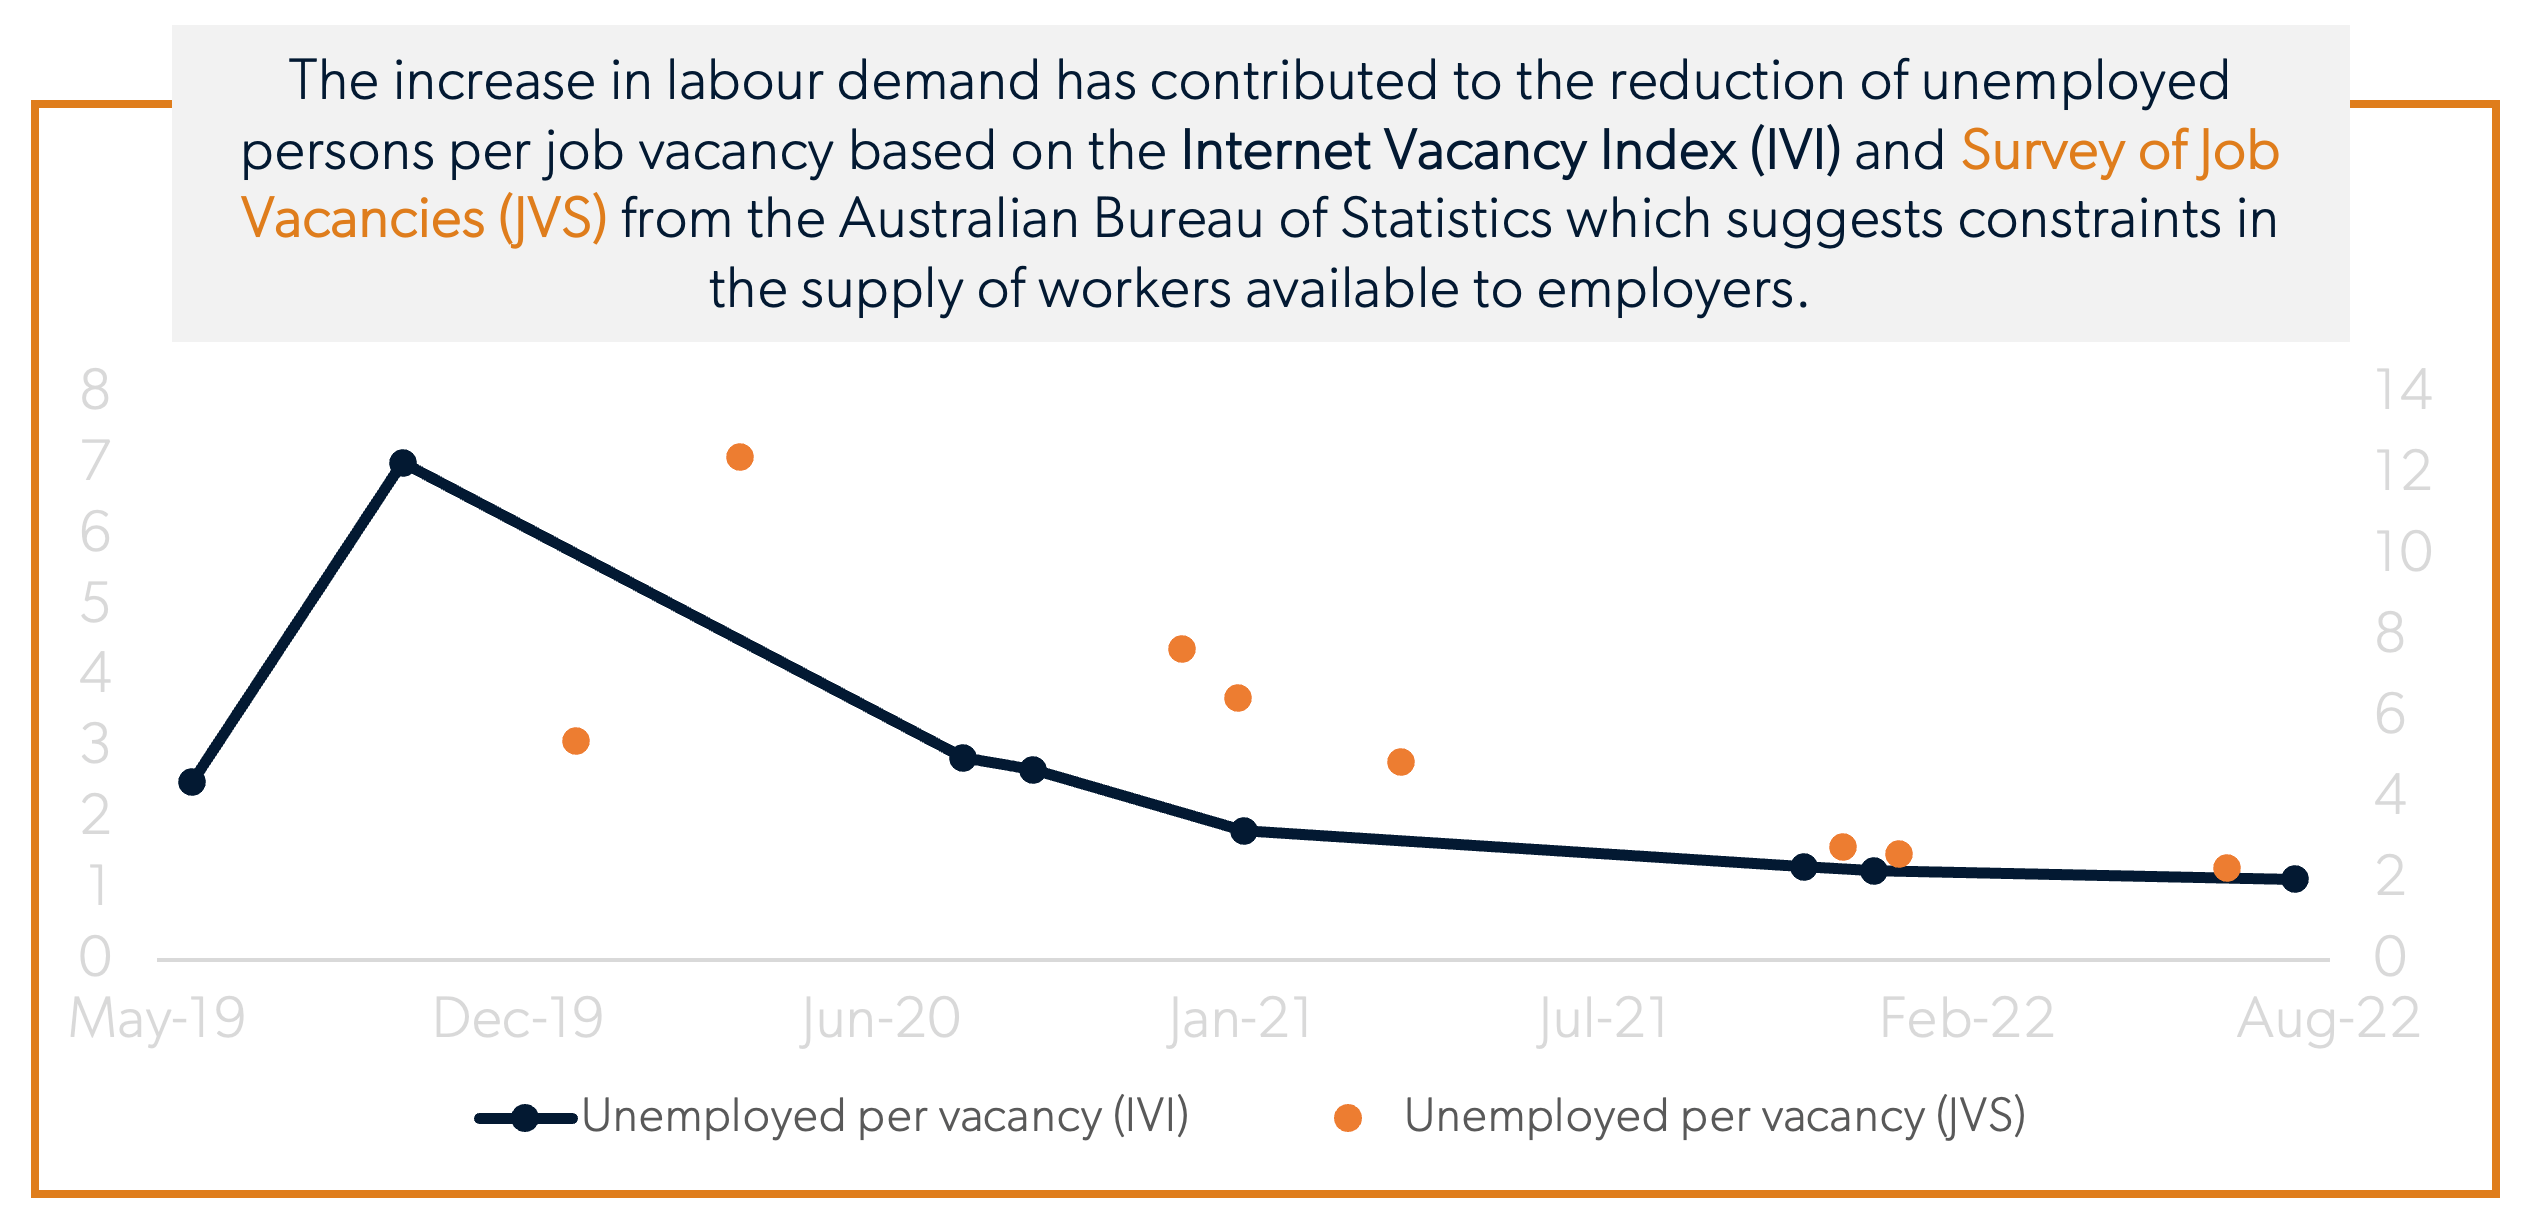 Australia_Workforce_Trends_2019-2022-Unemployment-Per-Vacancy